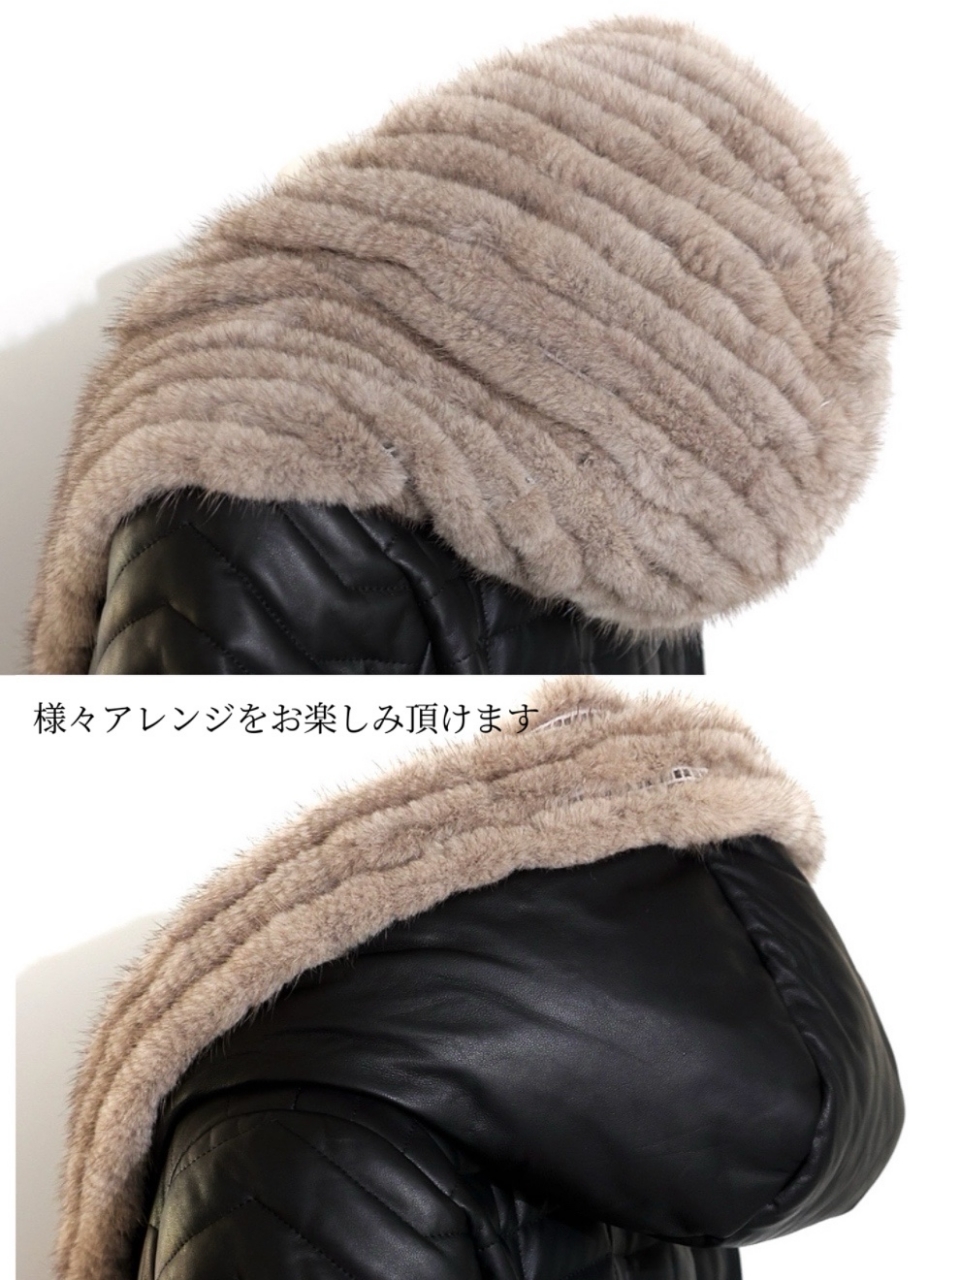 Real Mink Fur本革ラムレザー グース90%ダウンコート スタイリングイメージ7